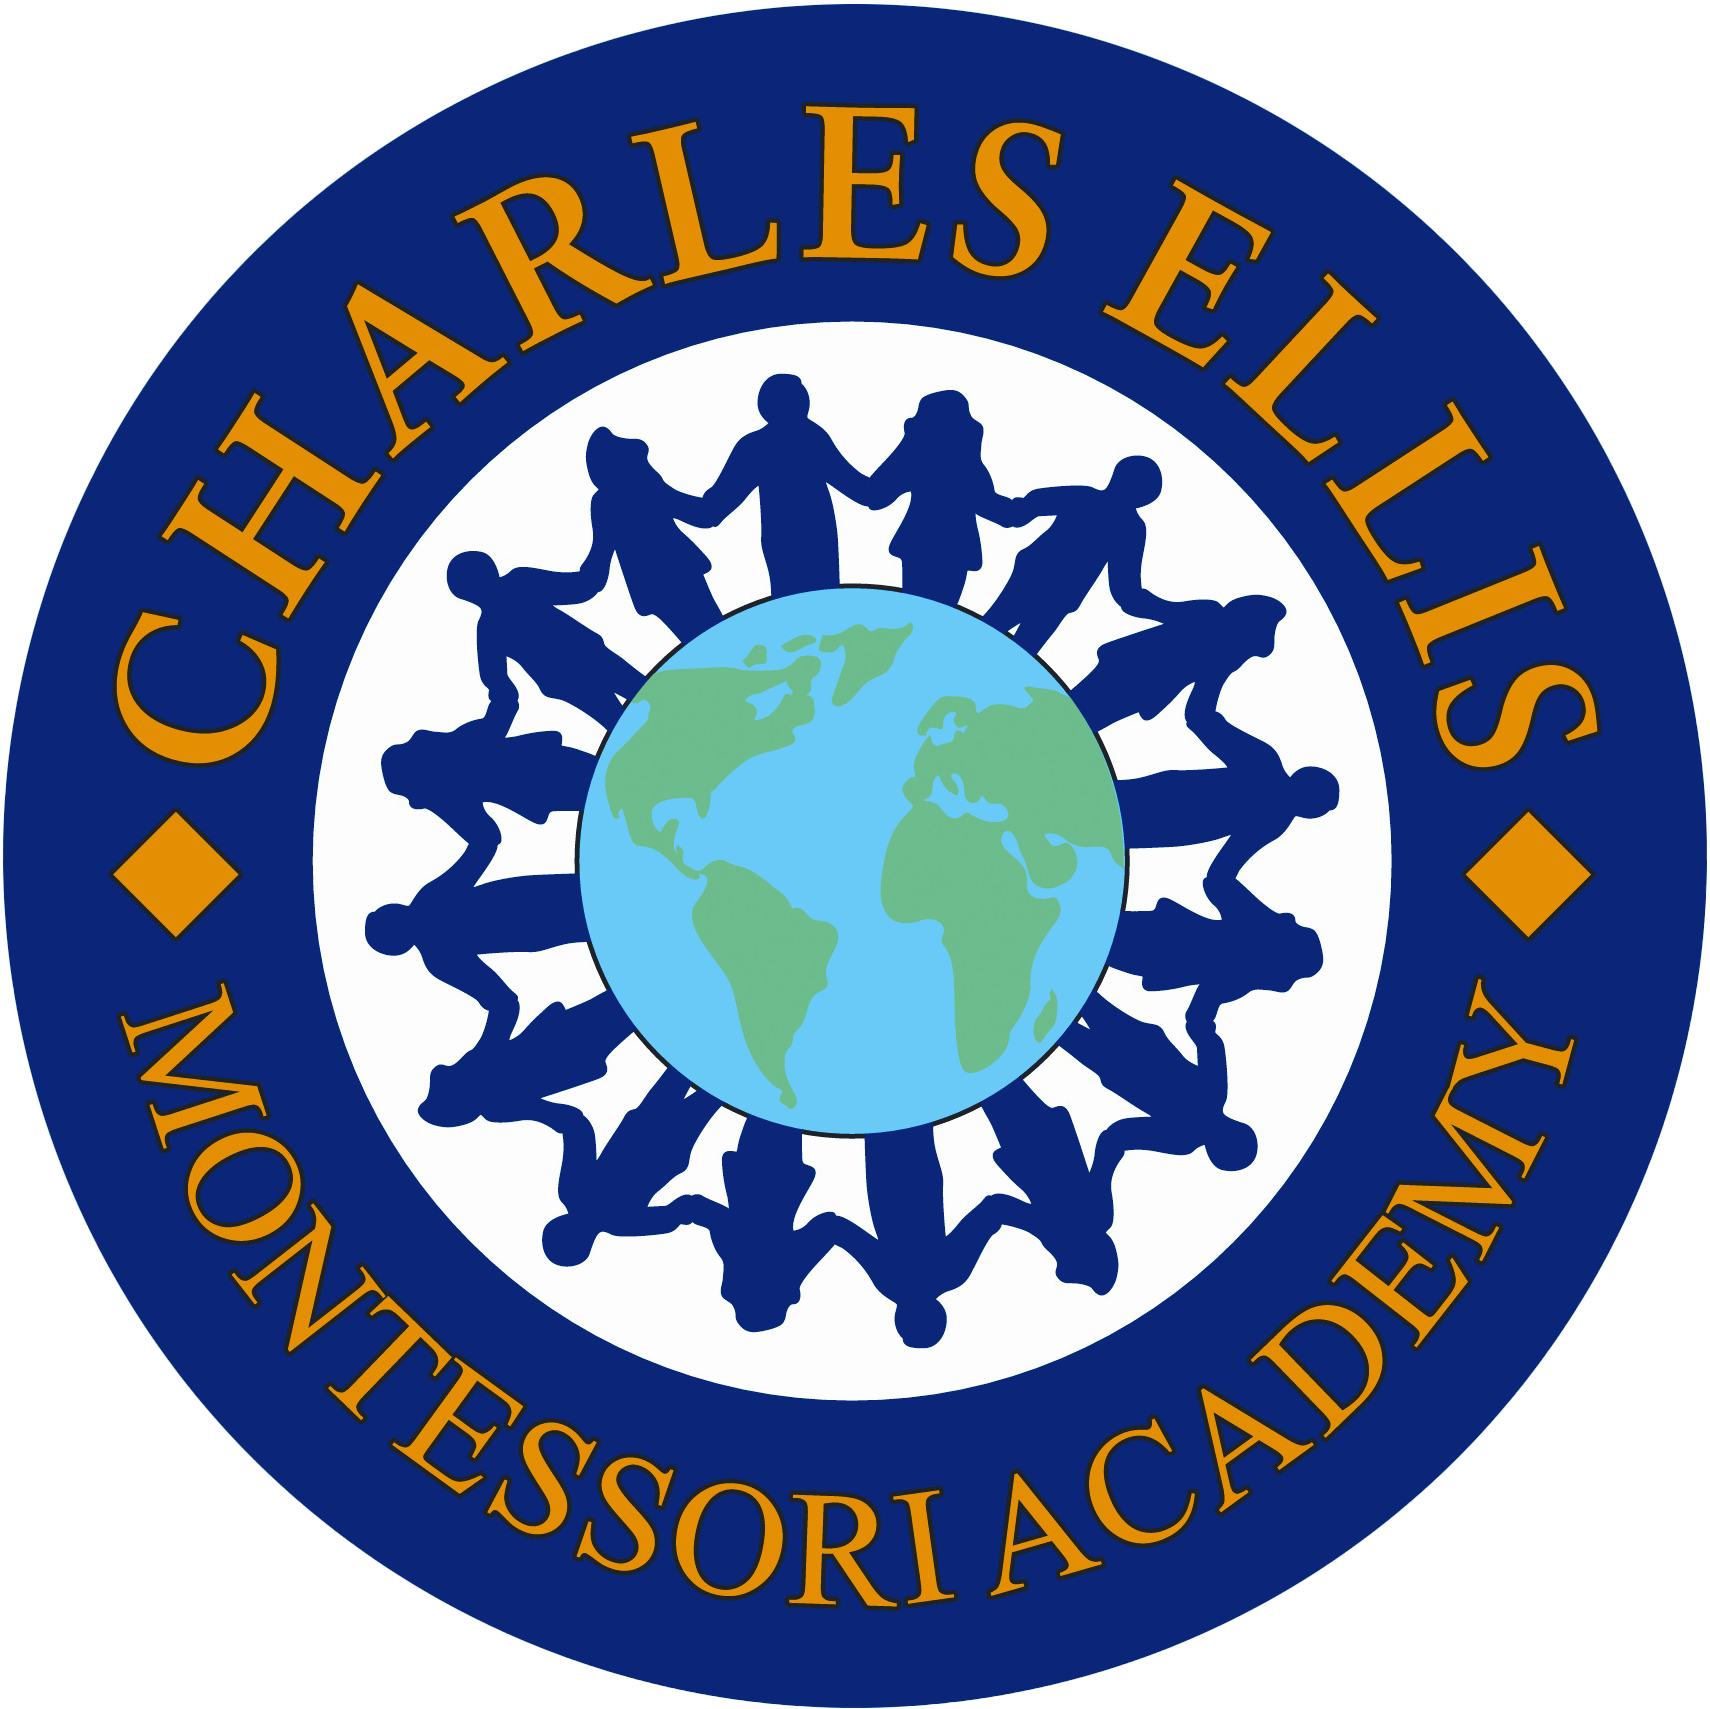 Charles Ellis Montessori Academy